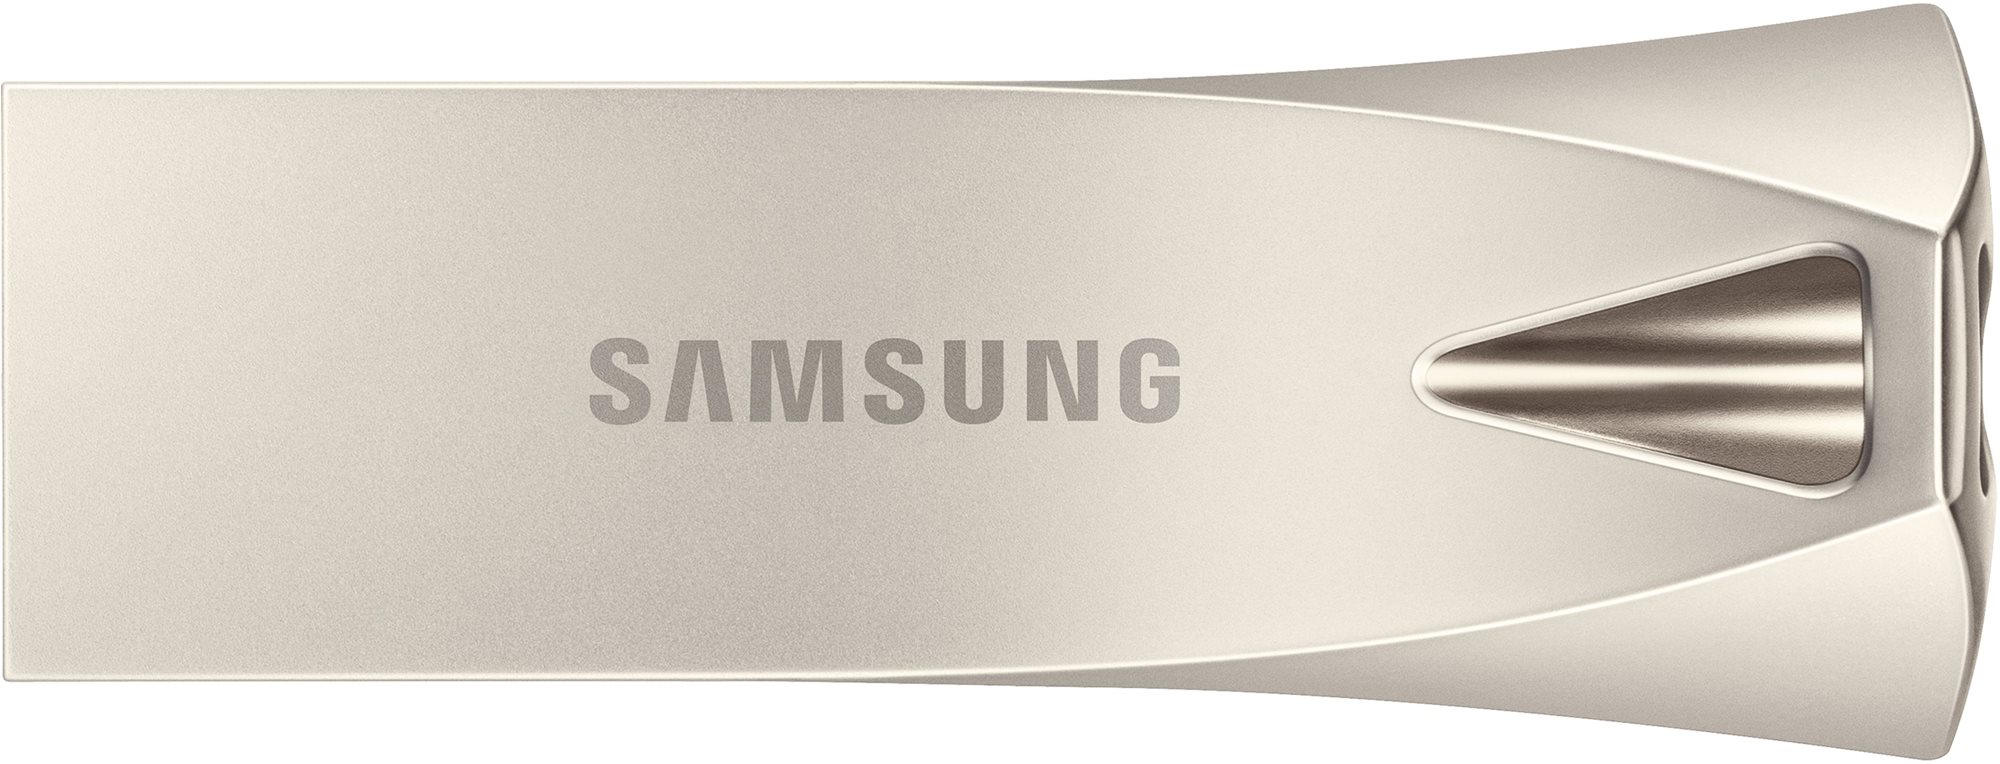 Pendrive Samsung USB 3.1 64GB Bar Plus Champagne Silver